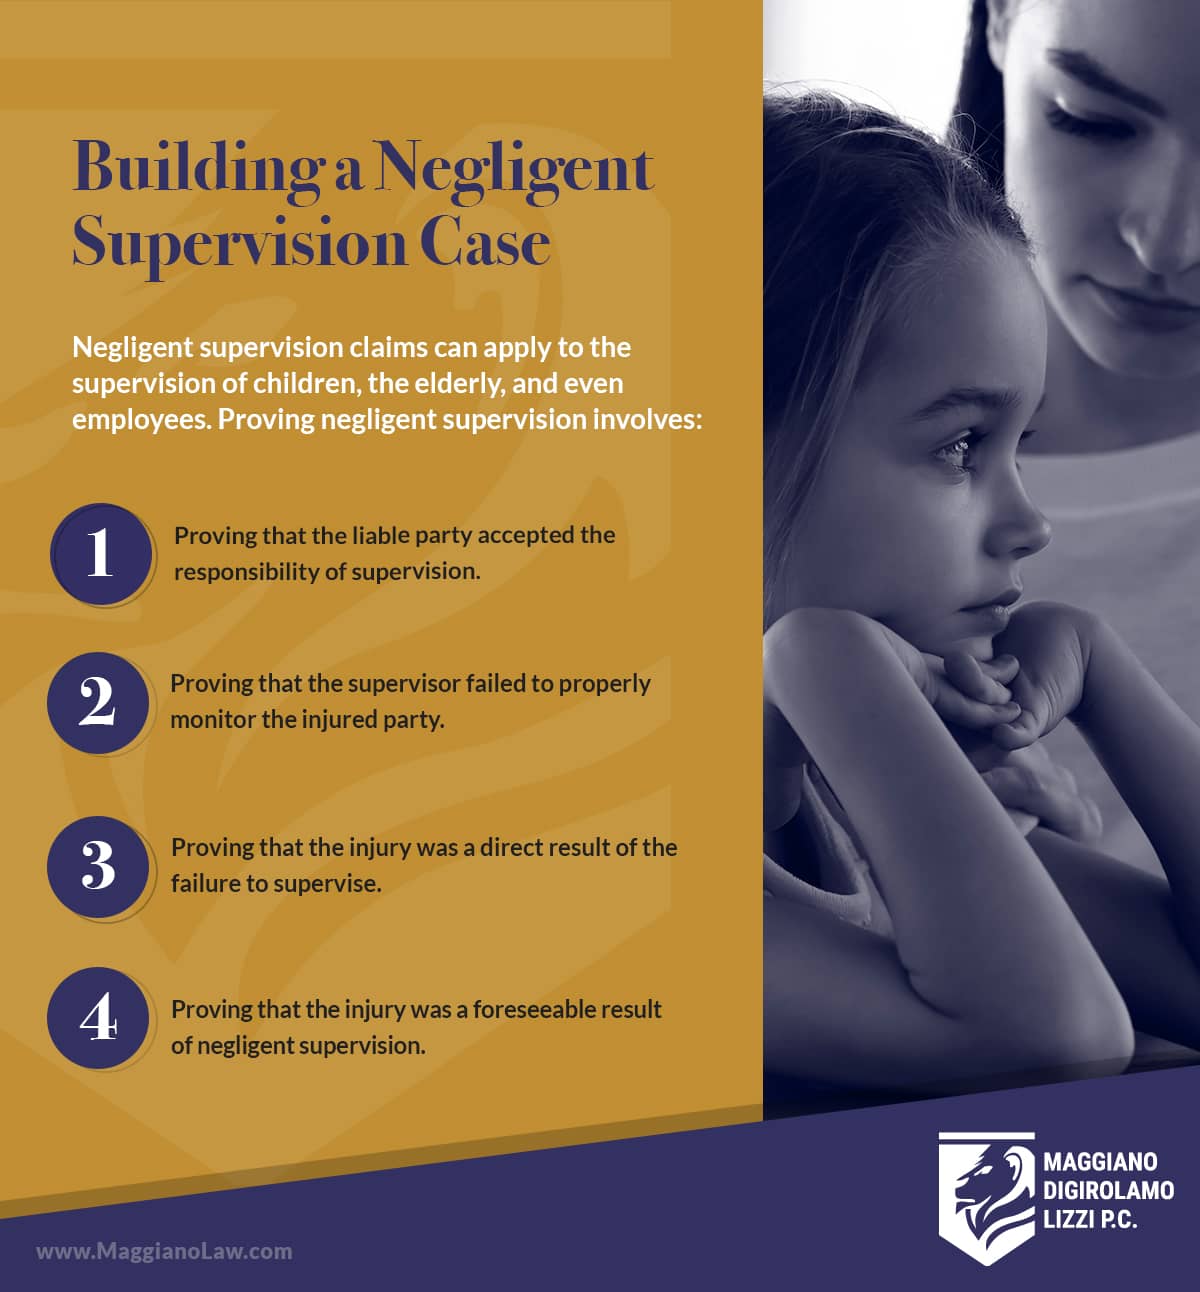 When Can I File a Negligent Supervision Claim? | Maggiano, DiGirolamo and Lizzi